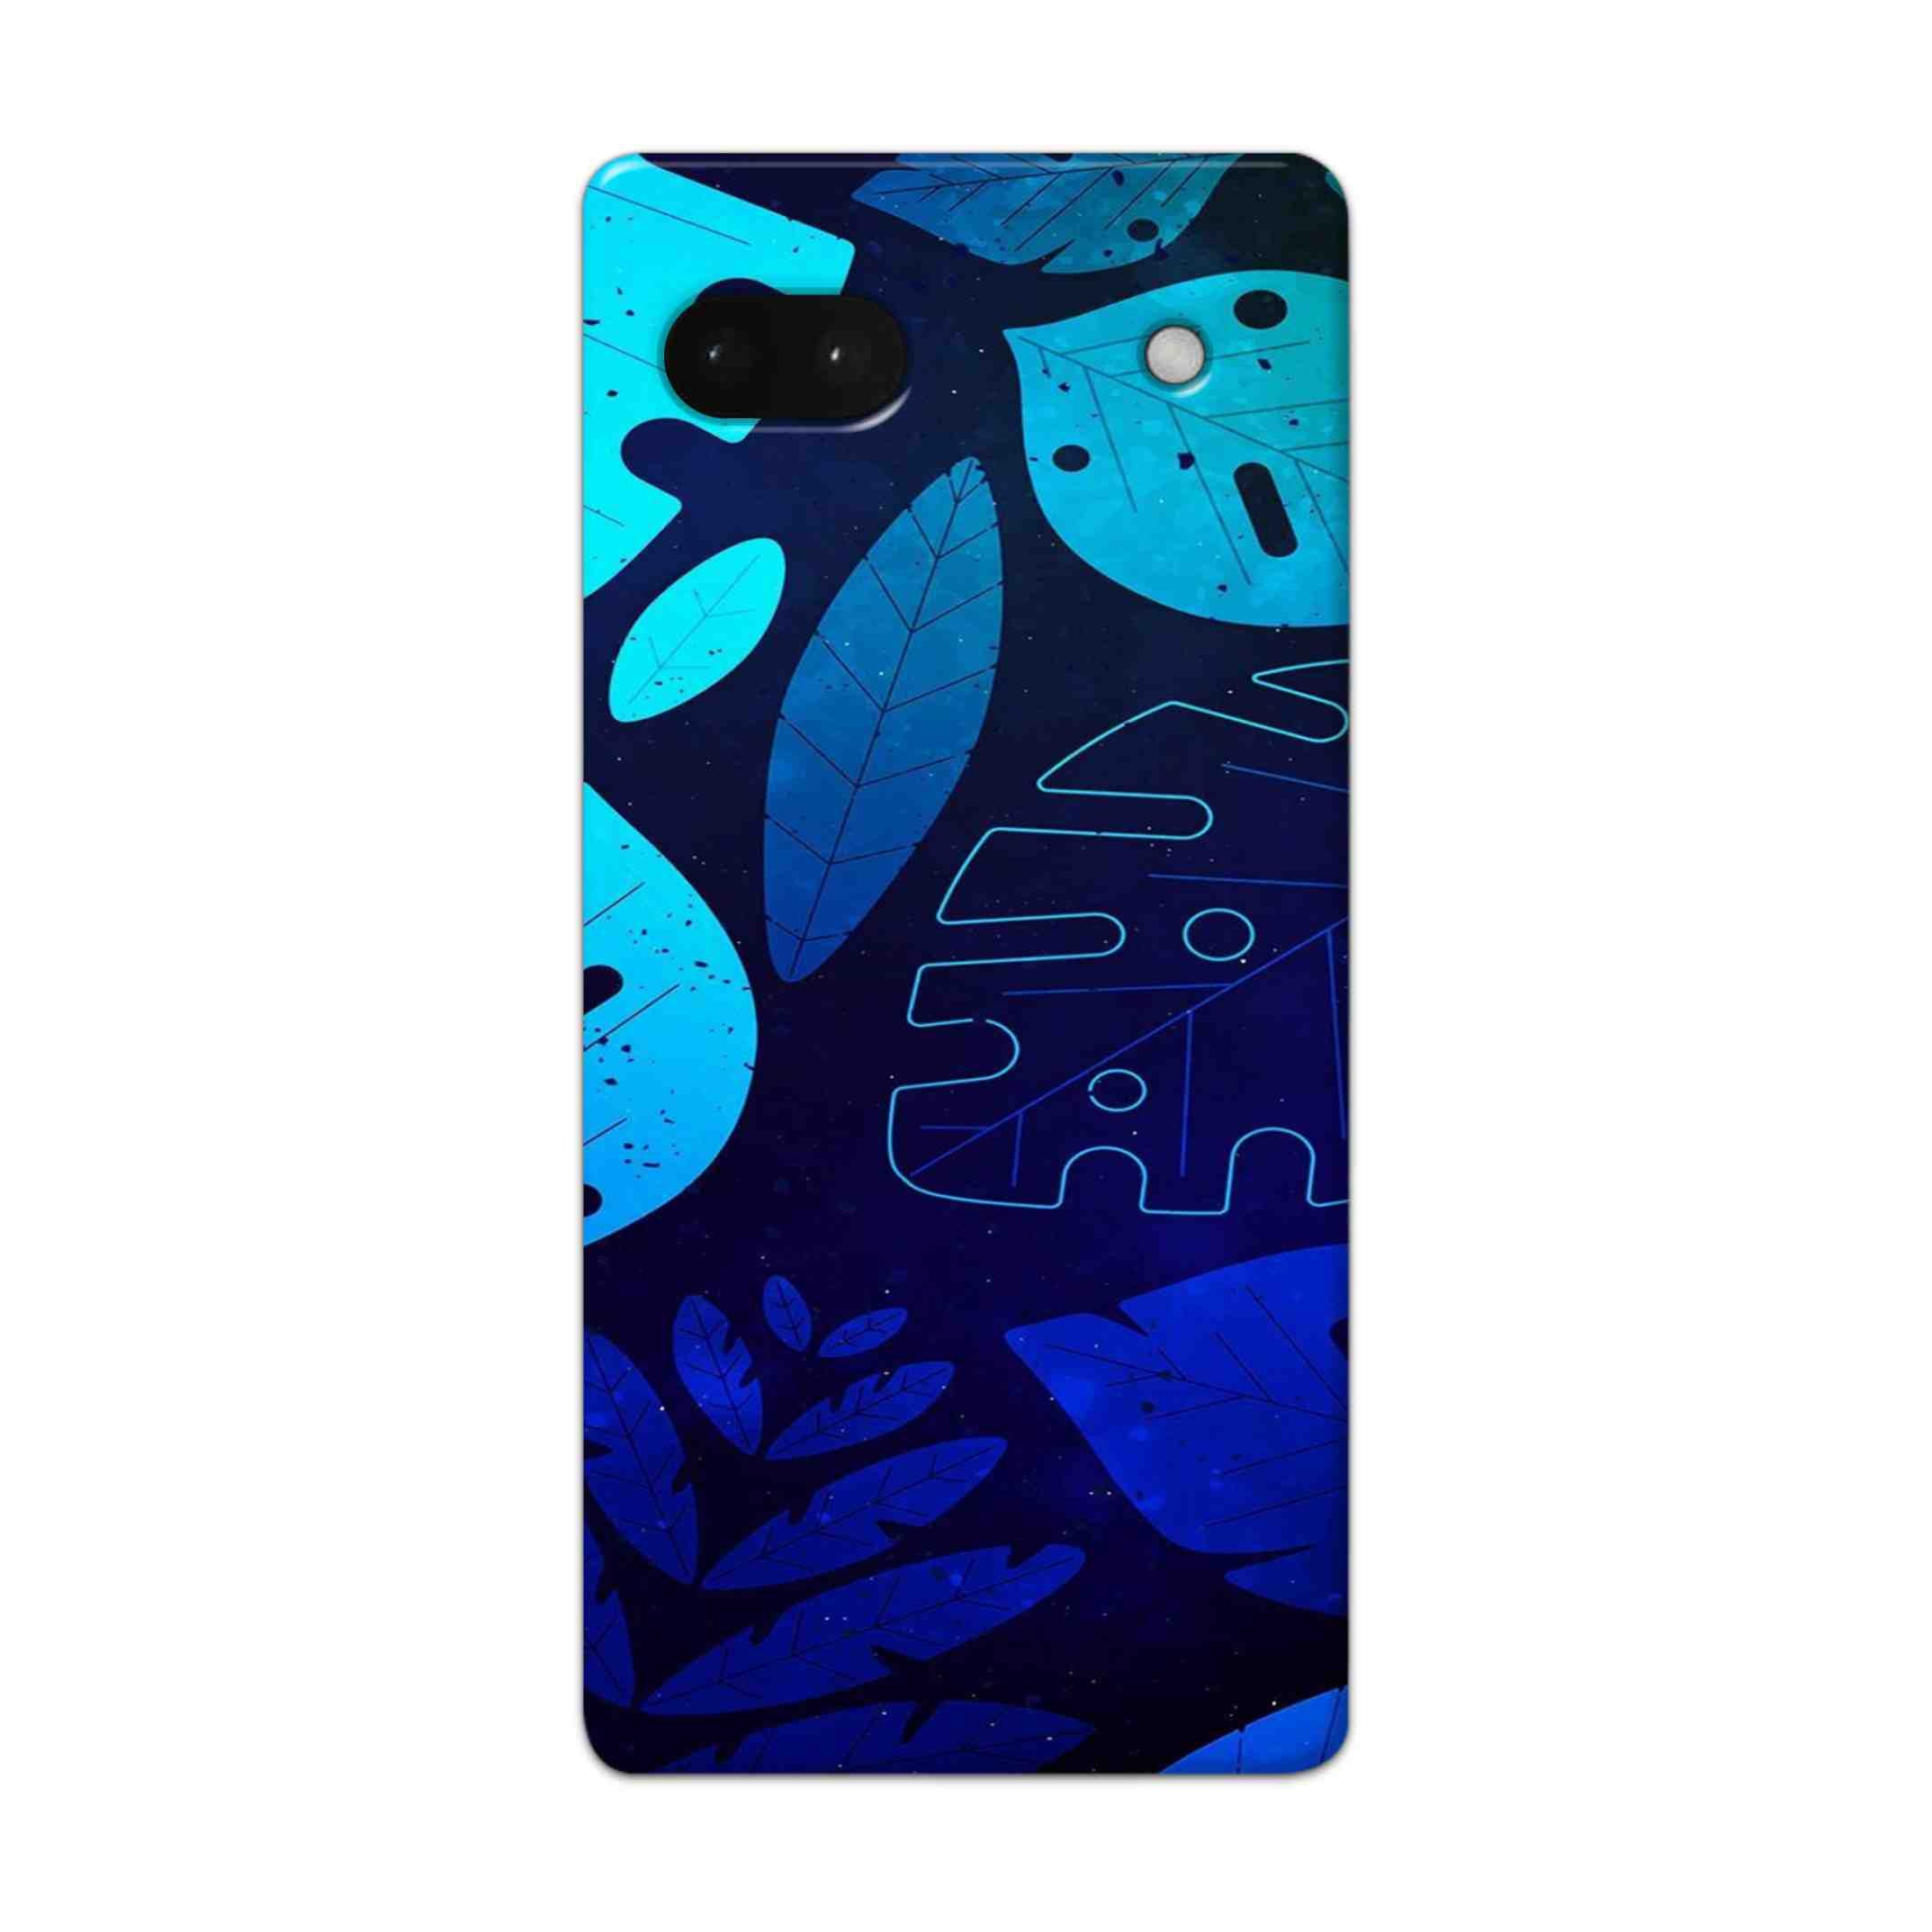 Buy Neon Leaf Hard Back Mobile Phone Case Cover For Google Pixel 6a Online